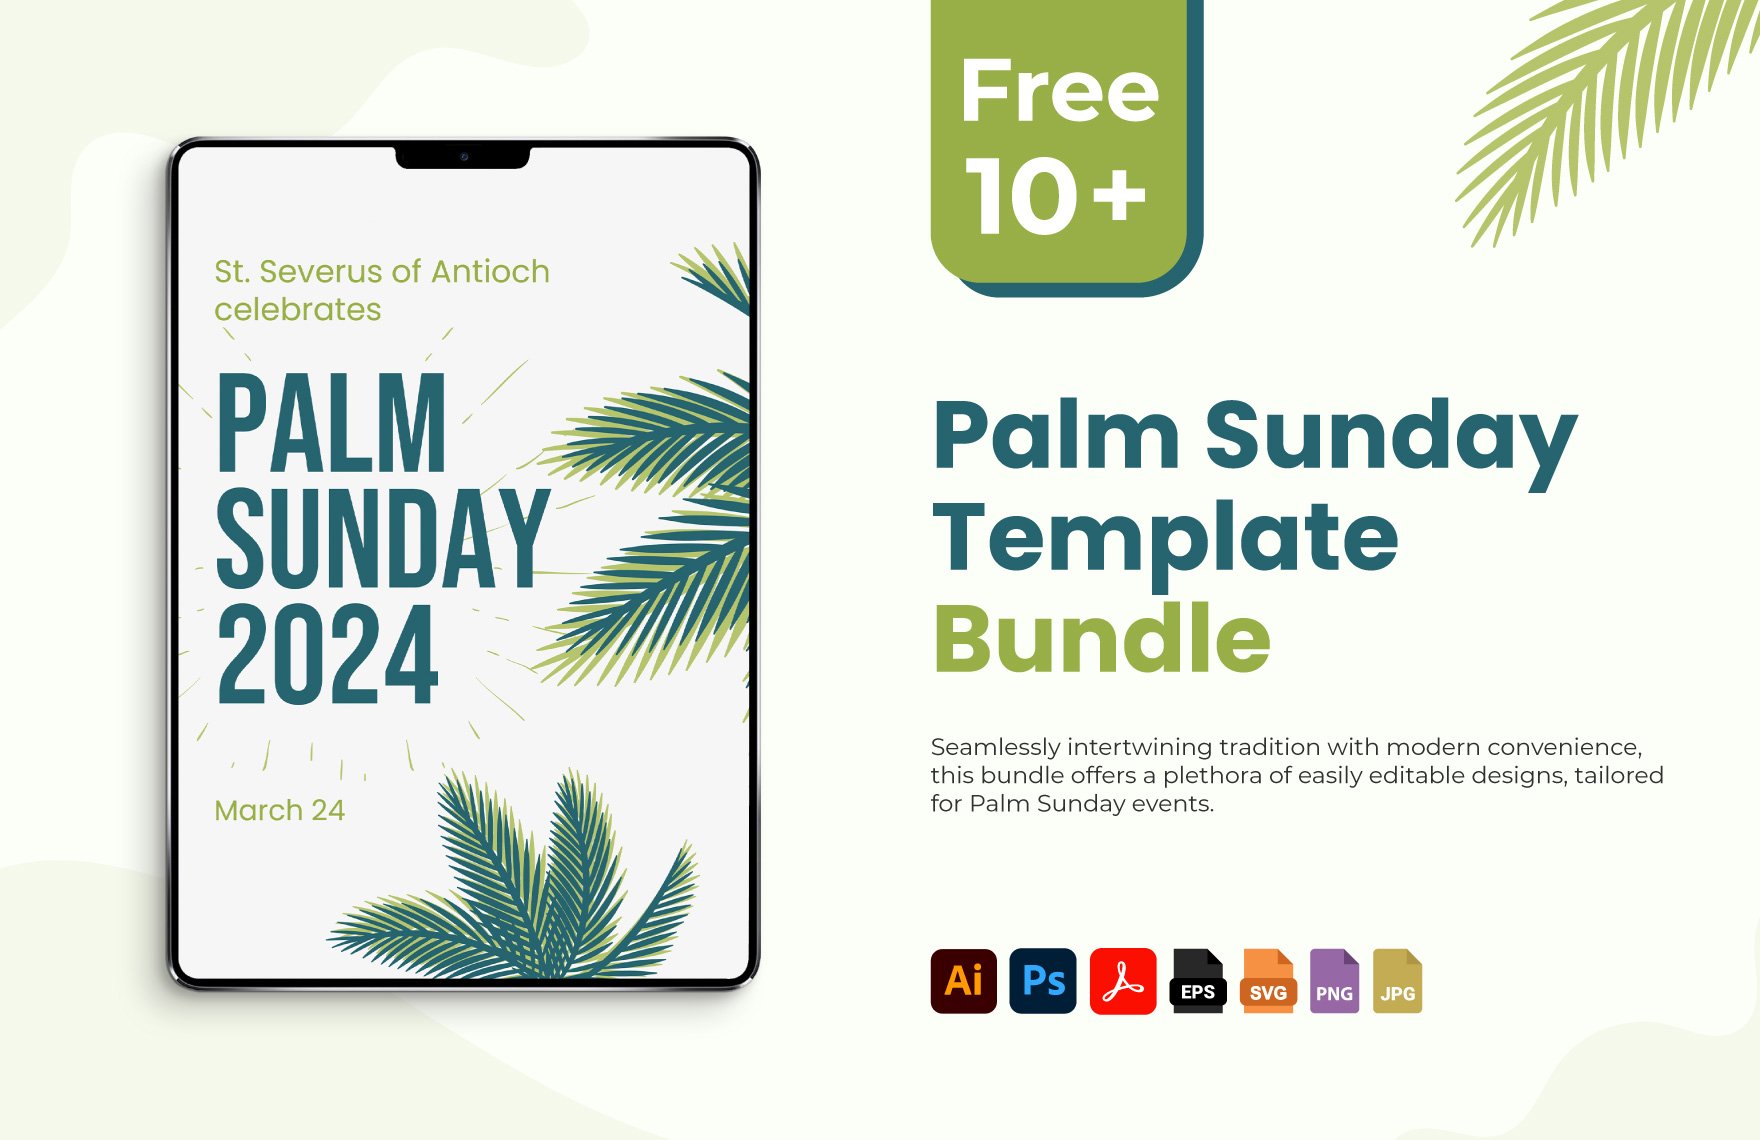 Free 10+ Palm Sunday Template Bundle